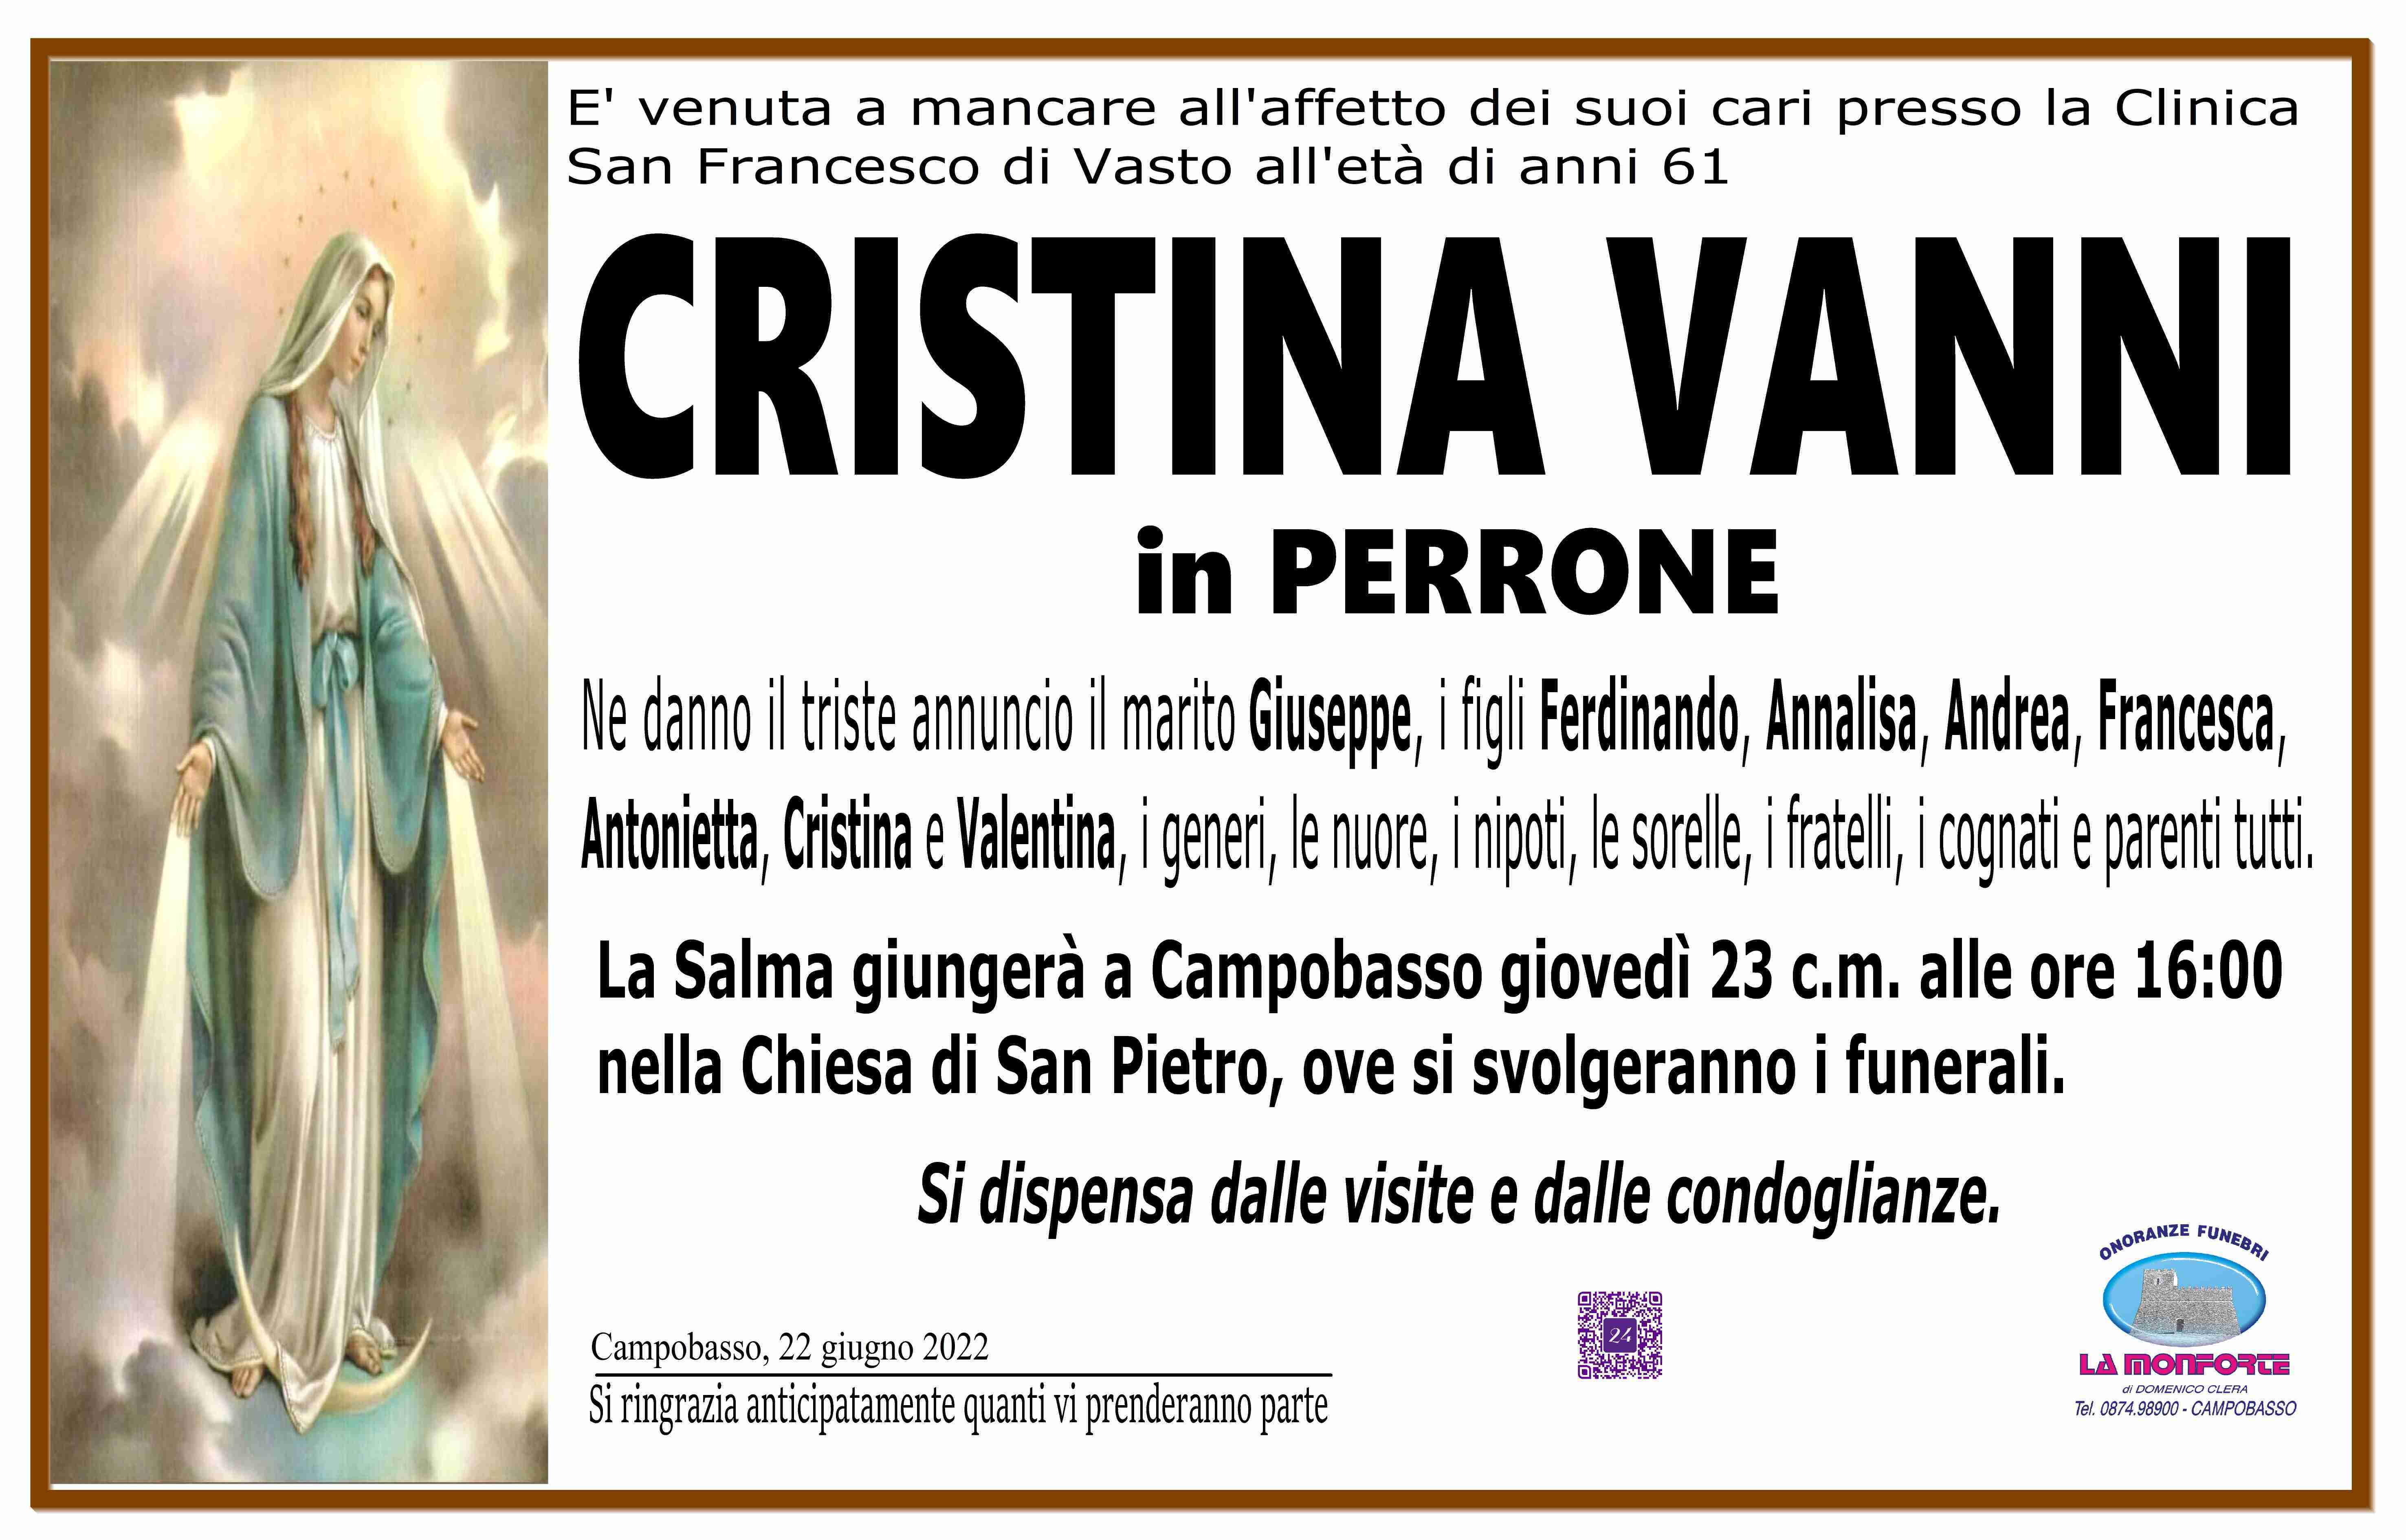 Cristina Vanni